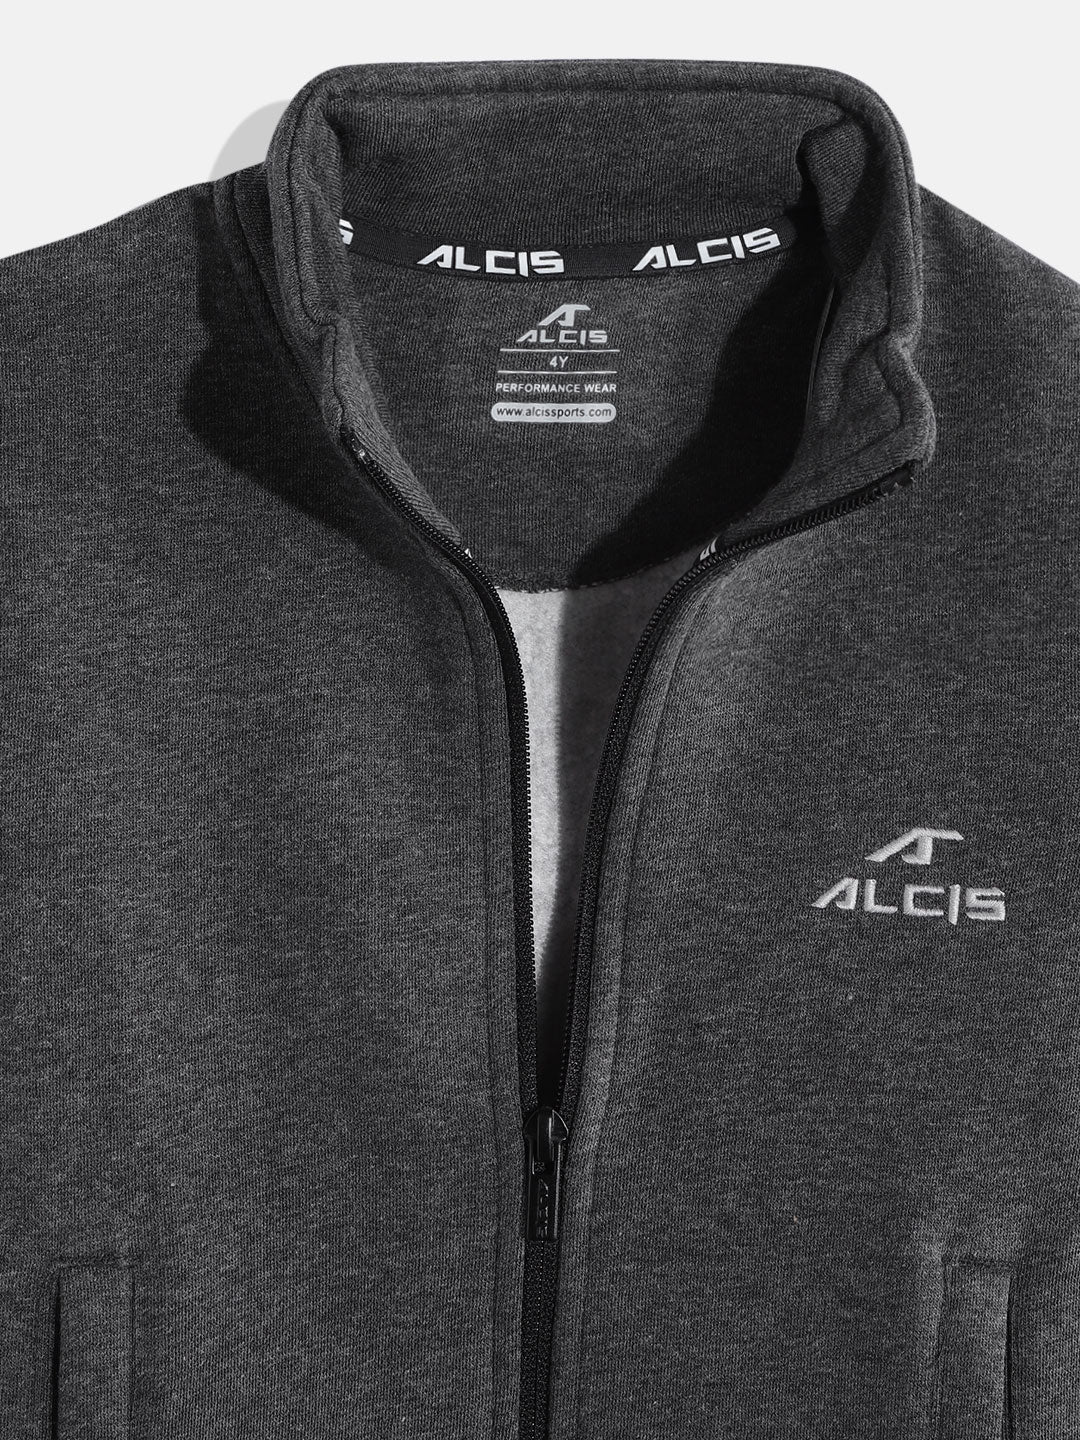 Alcis Boys Charcoal Grey Solid Sweatshirt